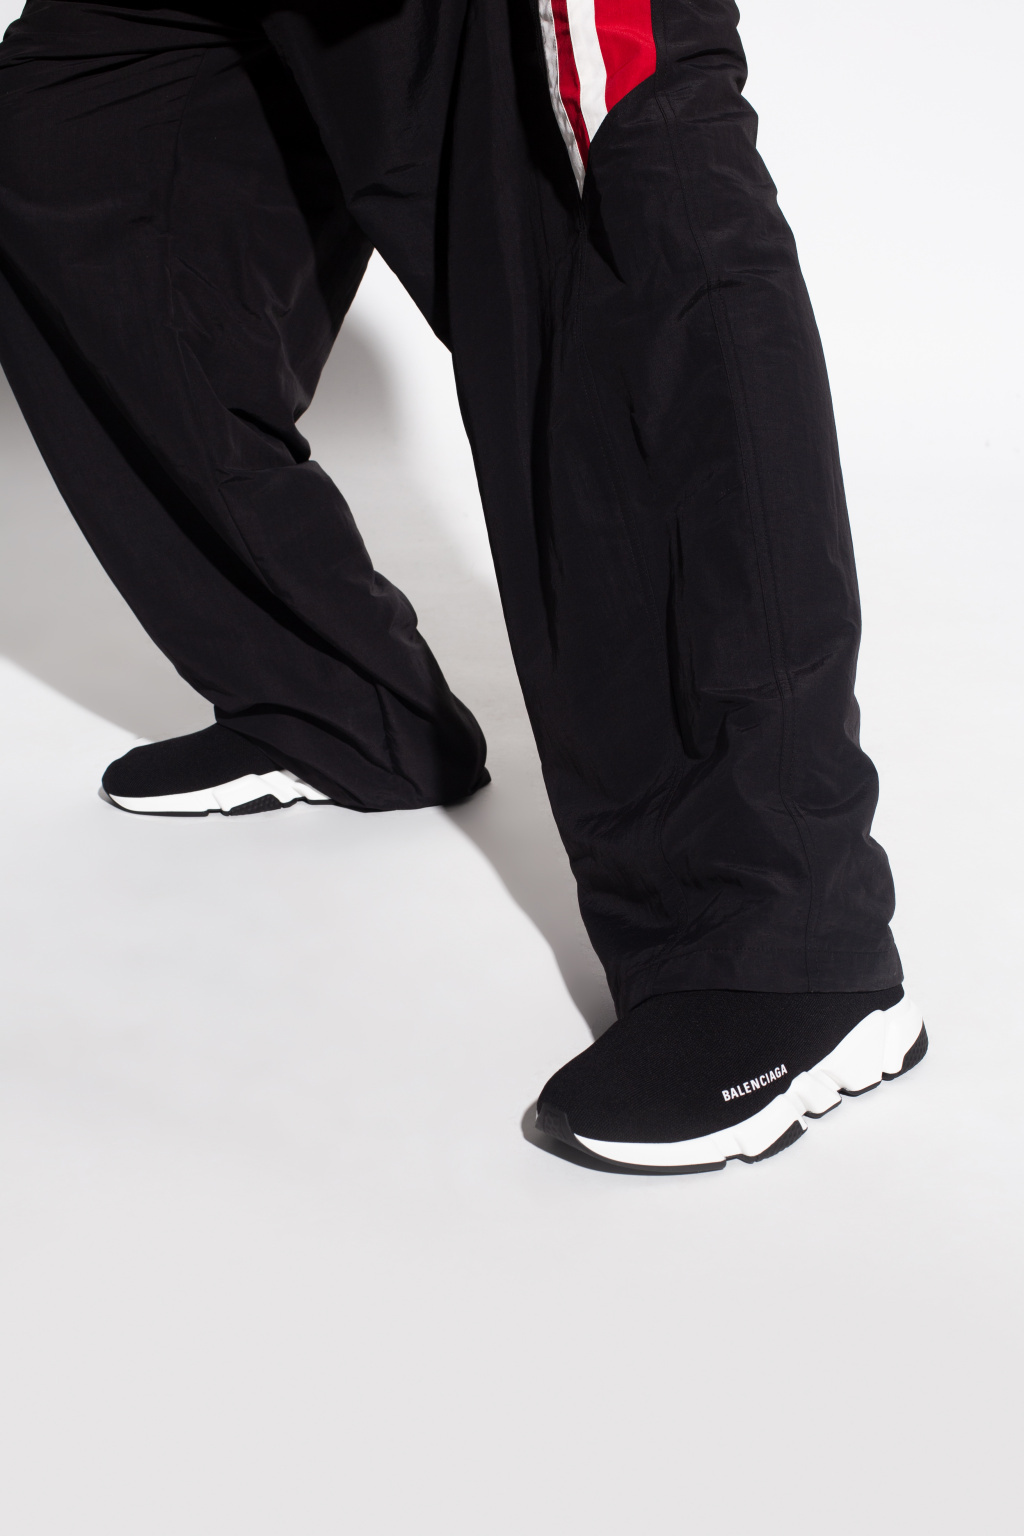 Balenciaga ‘Speed LT’ sock sneakers | Men's Shoes | Vitkac